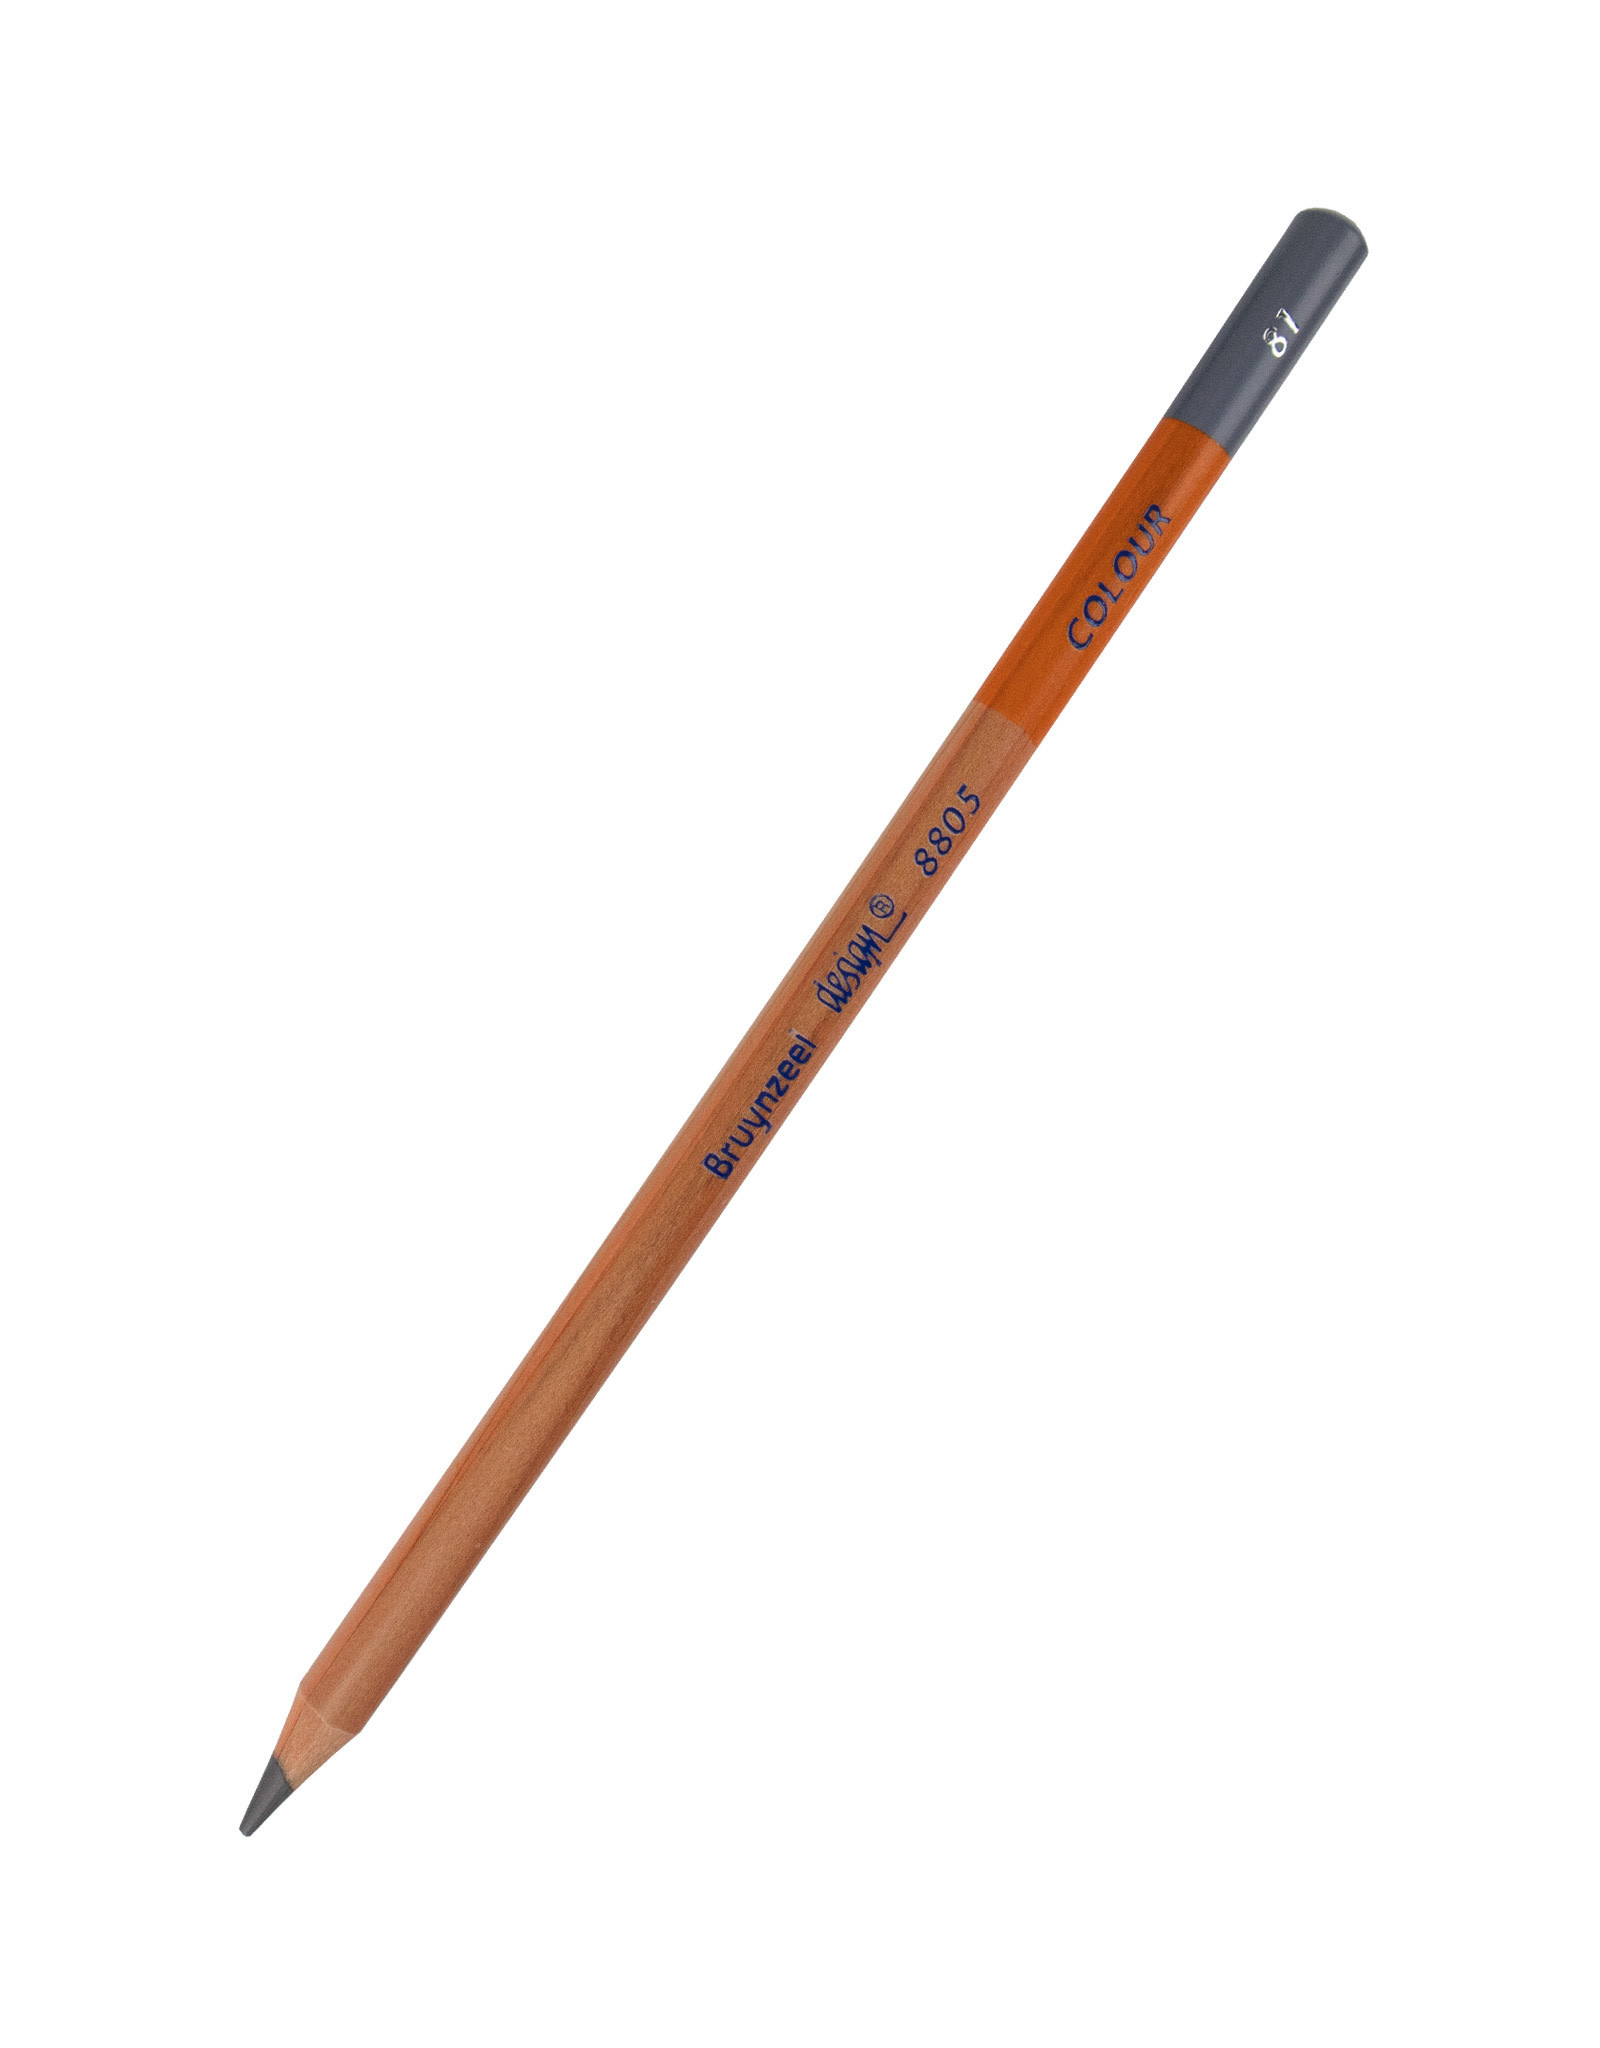 Royal Talens Bruynzeel Design Coloured Pencil, Mid Brown Grey